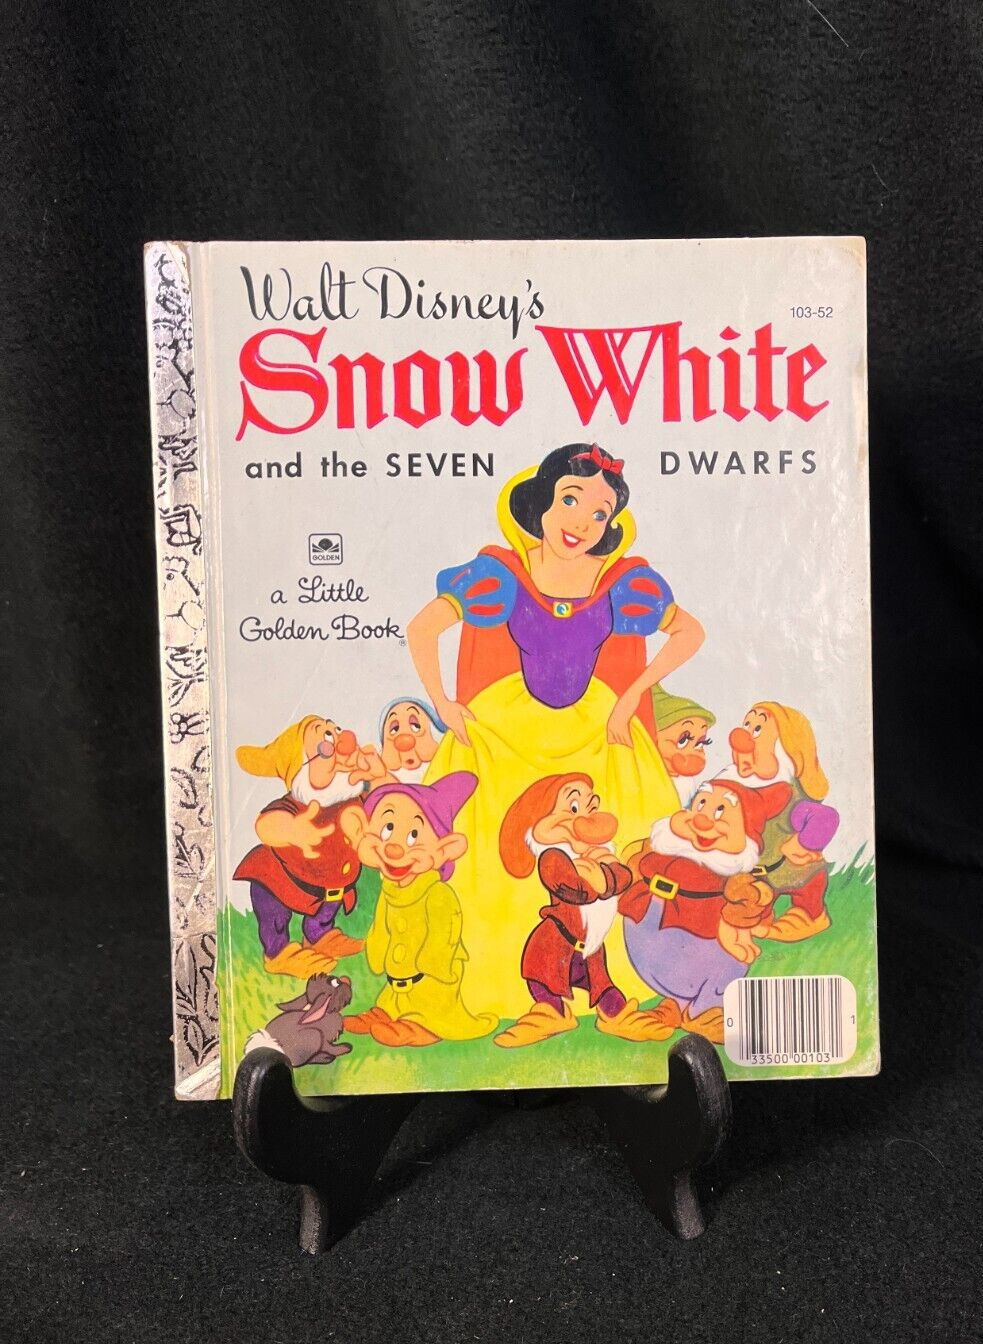 RARE FIND - SNOW WHITE and the SEVEN DWARFS - WALT DISNEY\'S Little Golden Book